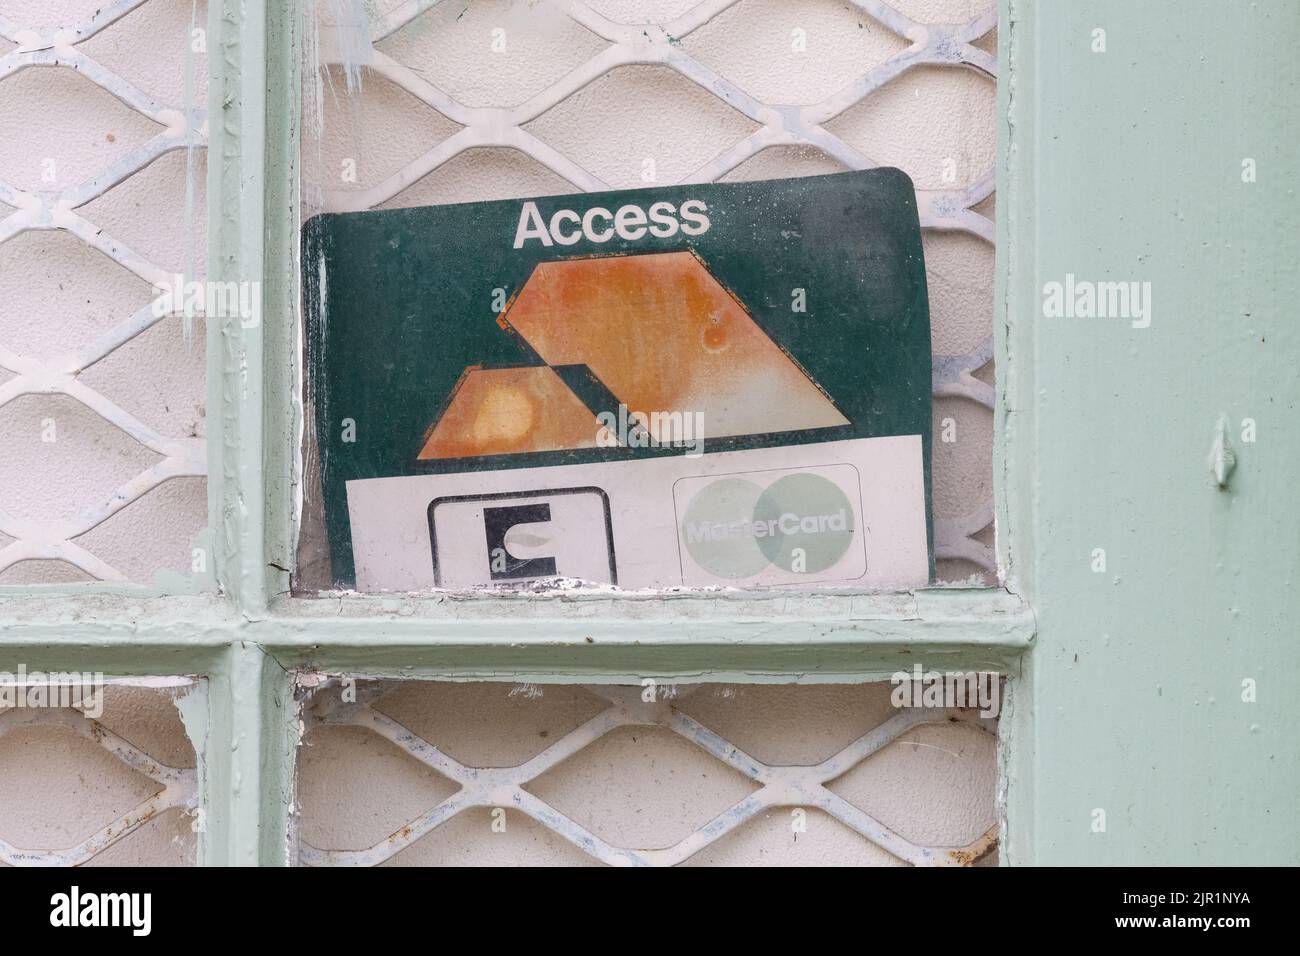 Access Credit Card symbol in window - Scotland, UK Stock Photo